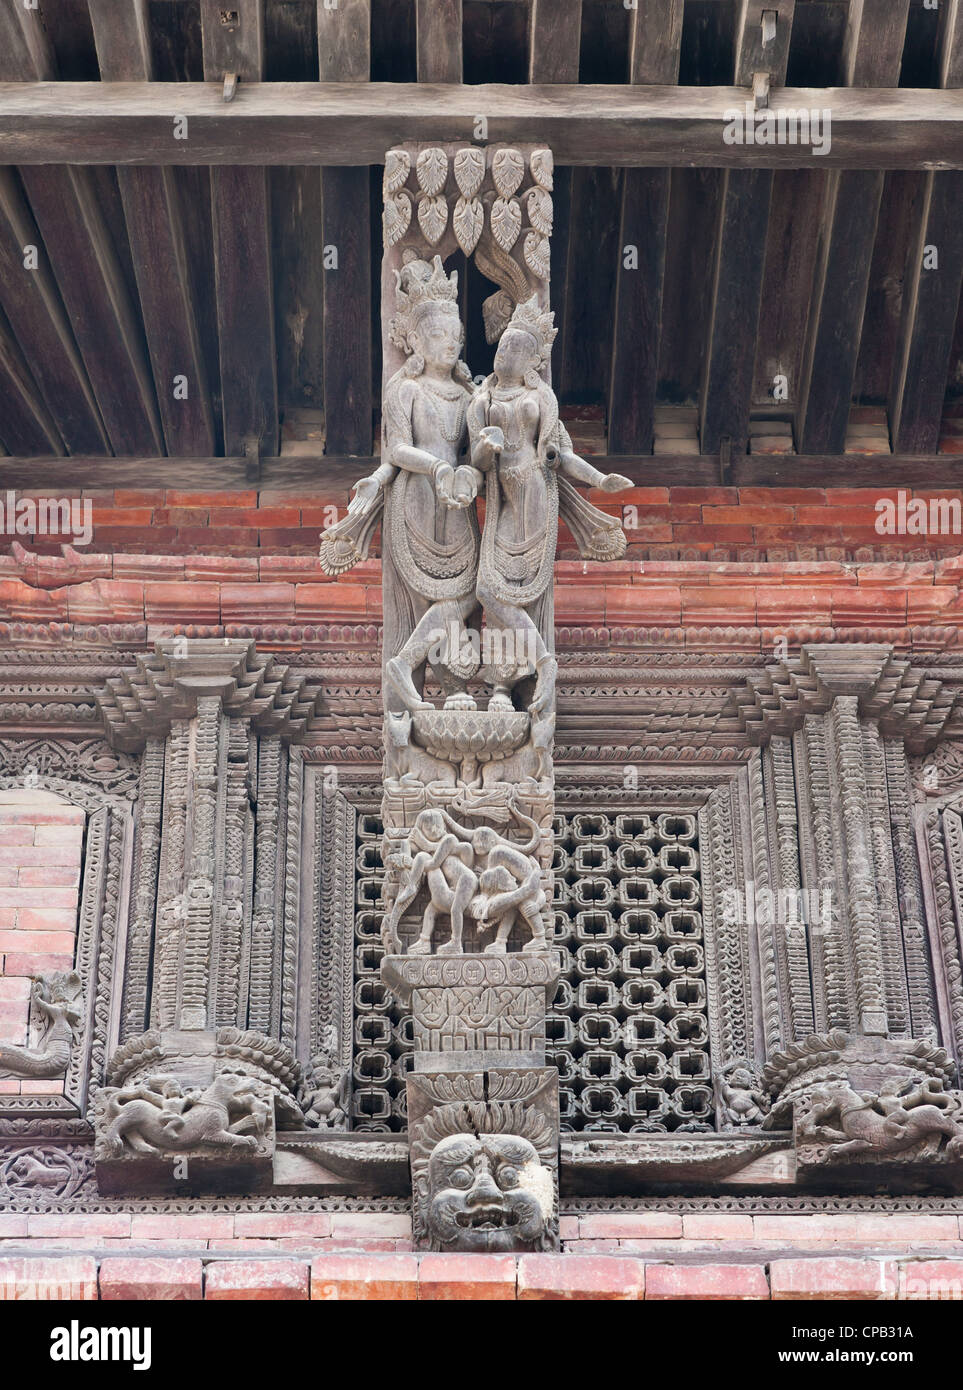 Kathmandu - Durbar Square - ancient woodwork with Kamasutra details. Stock Photo